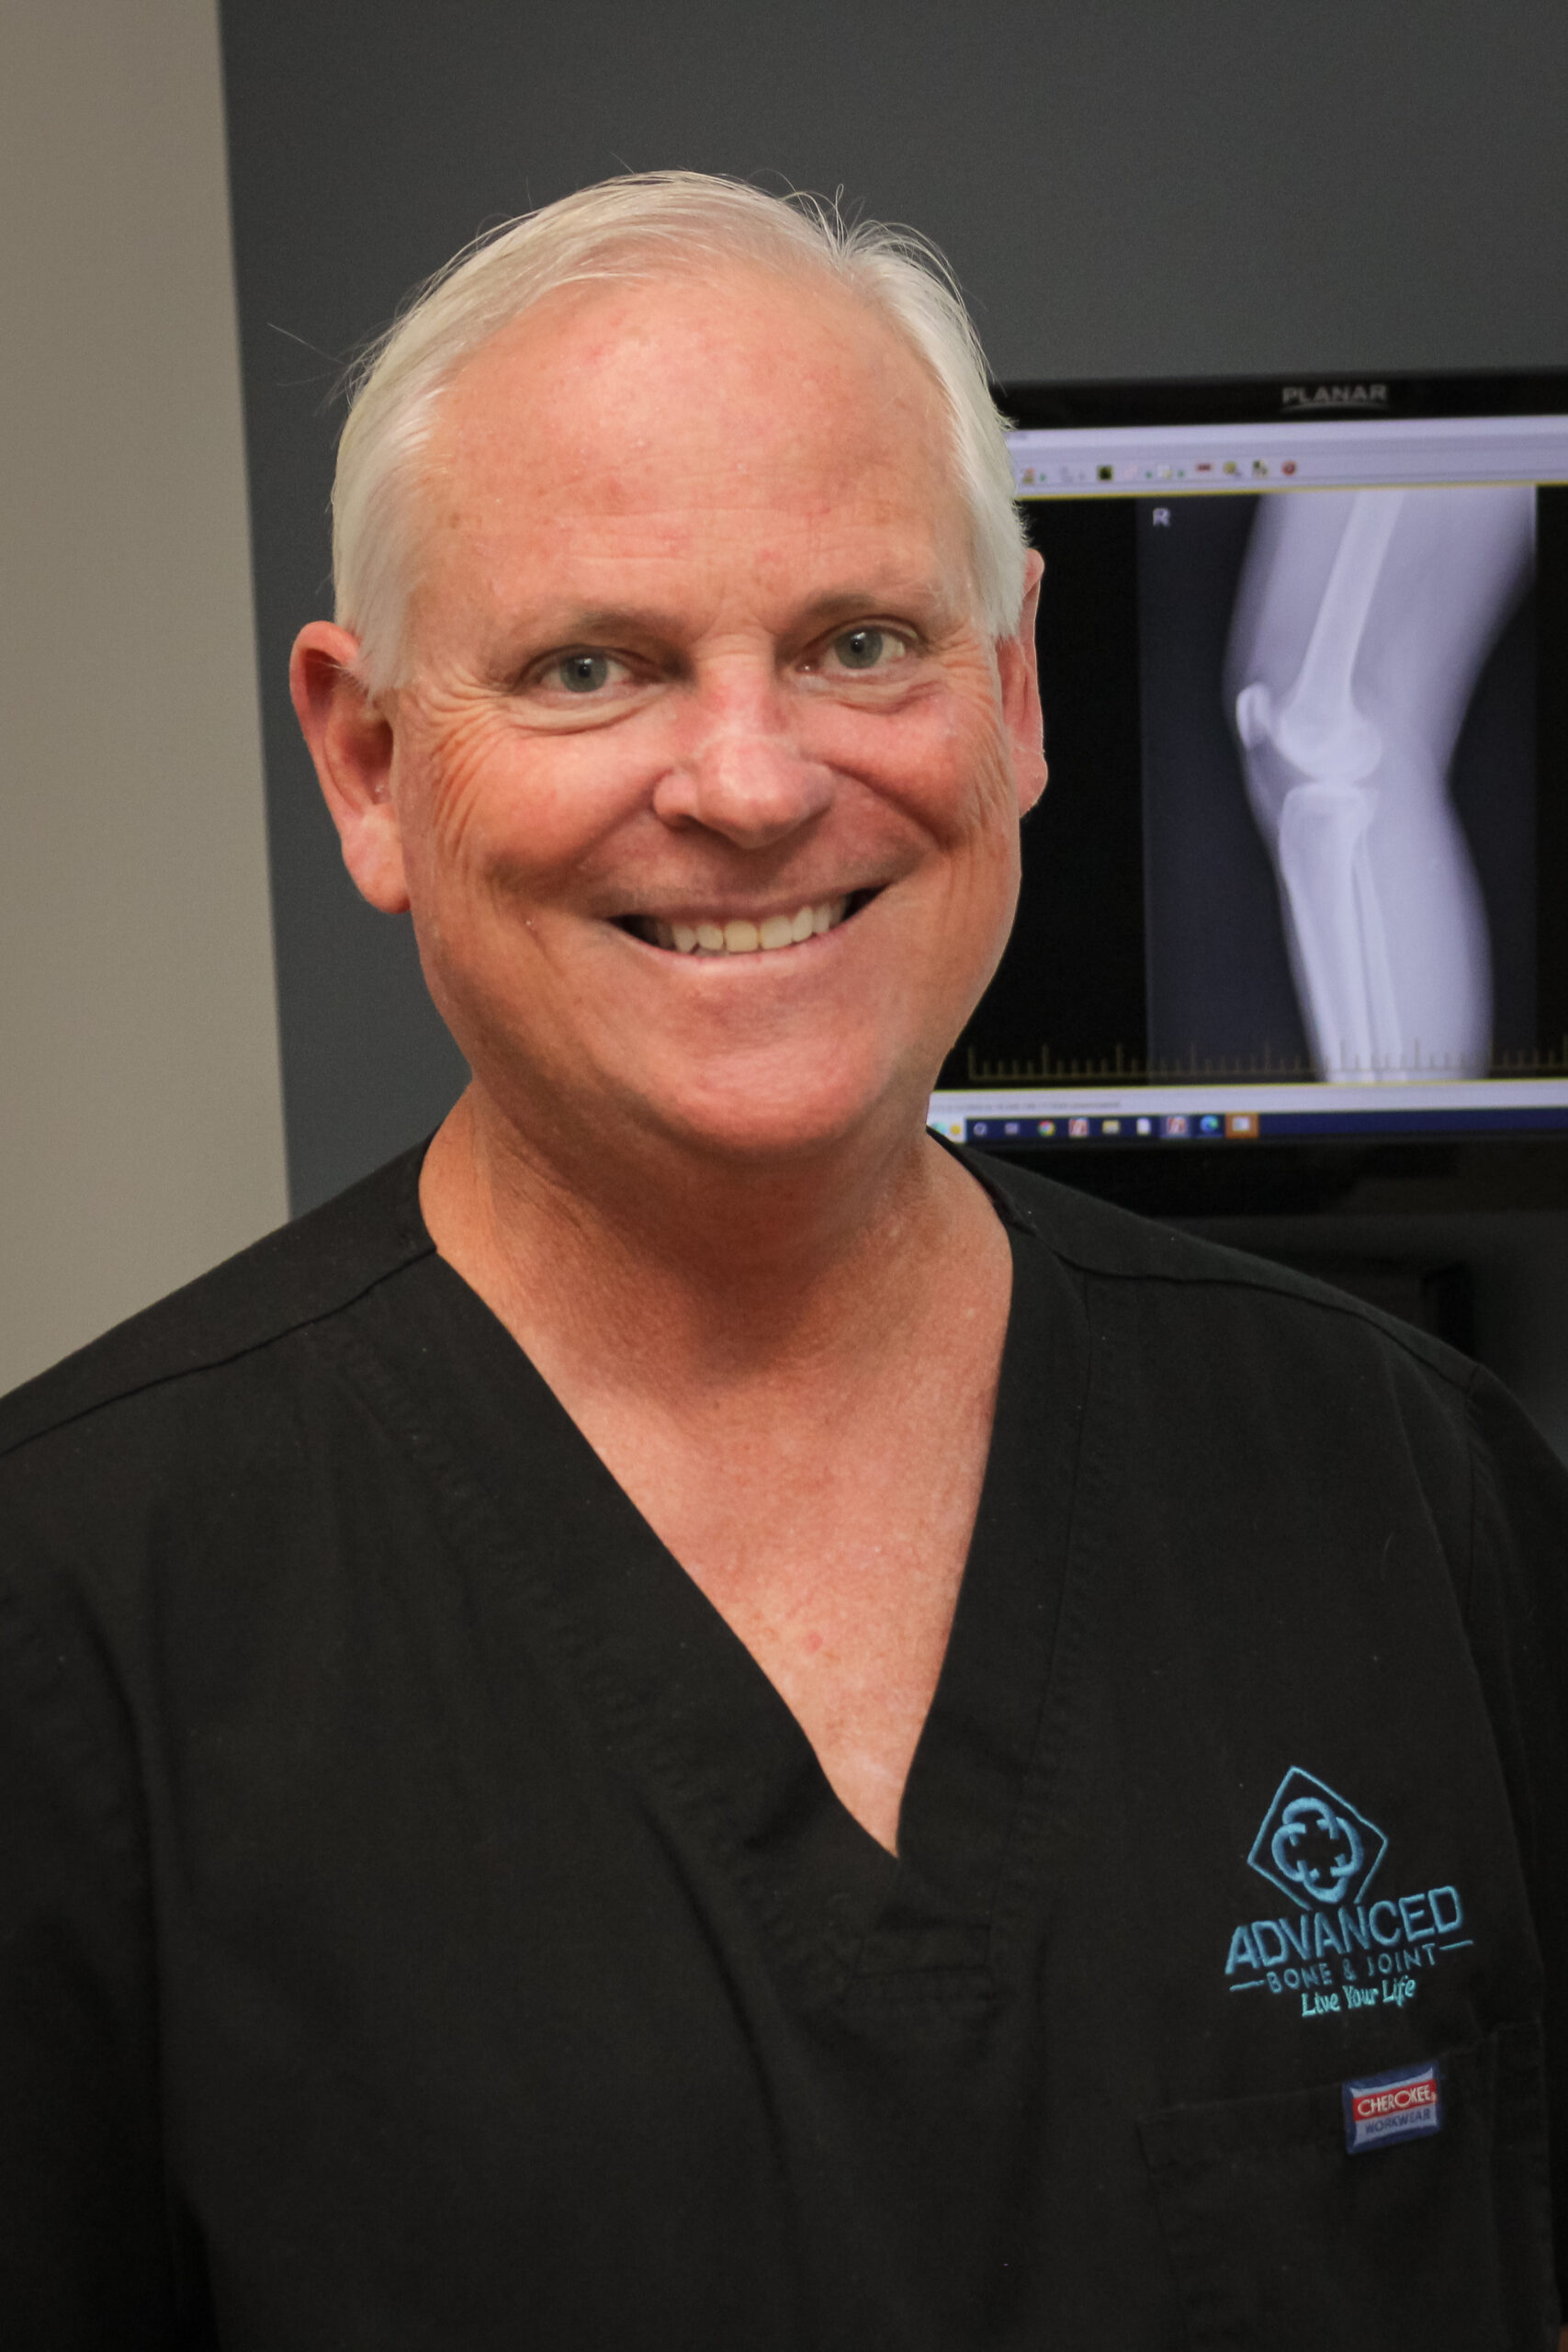 Orthopedic Urgent Care - Advanced Bone & Joint - Orthopedics - sports medicine - orthopedic doctor - orthopedic surgery - Sprains and Strains